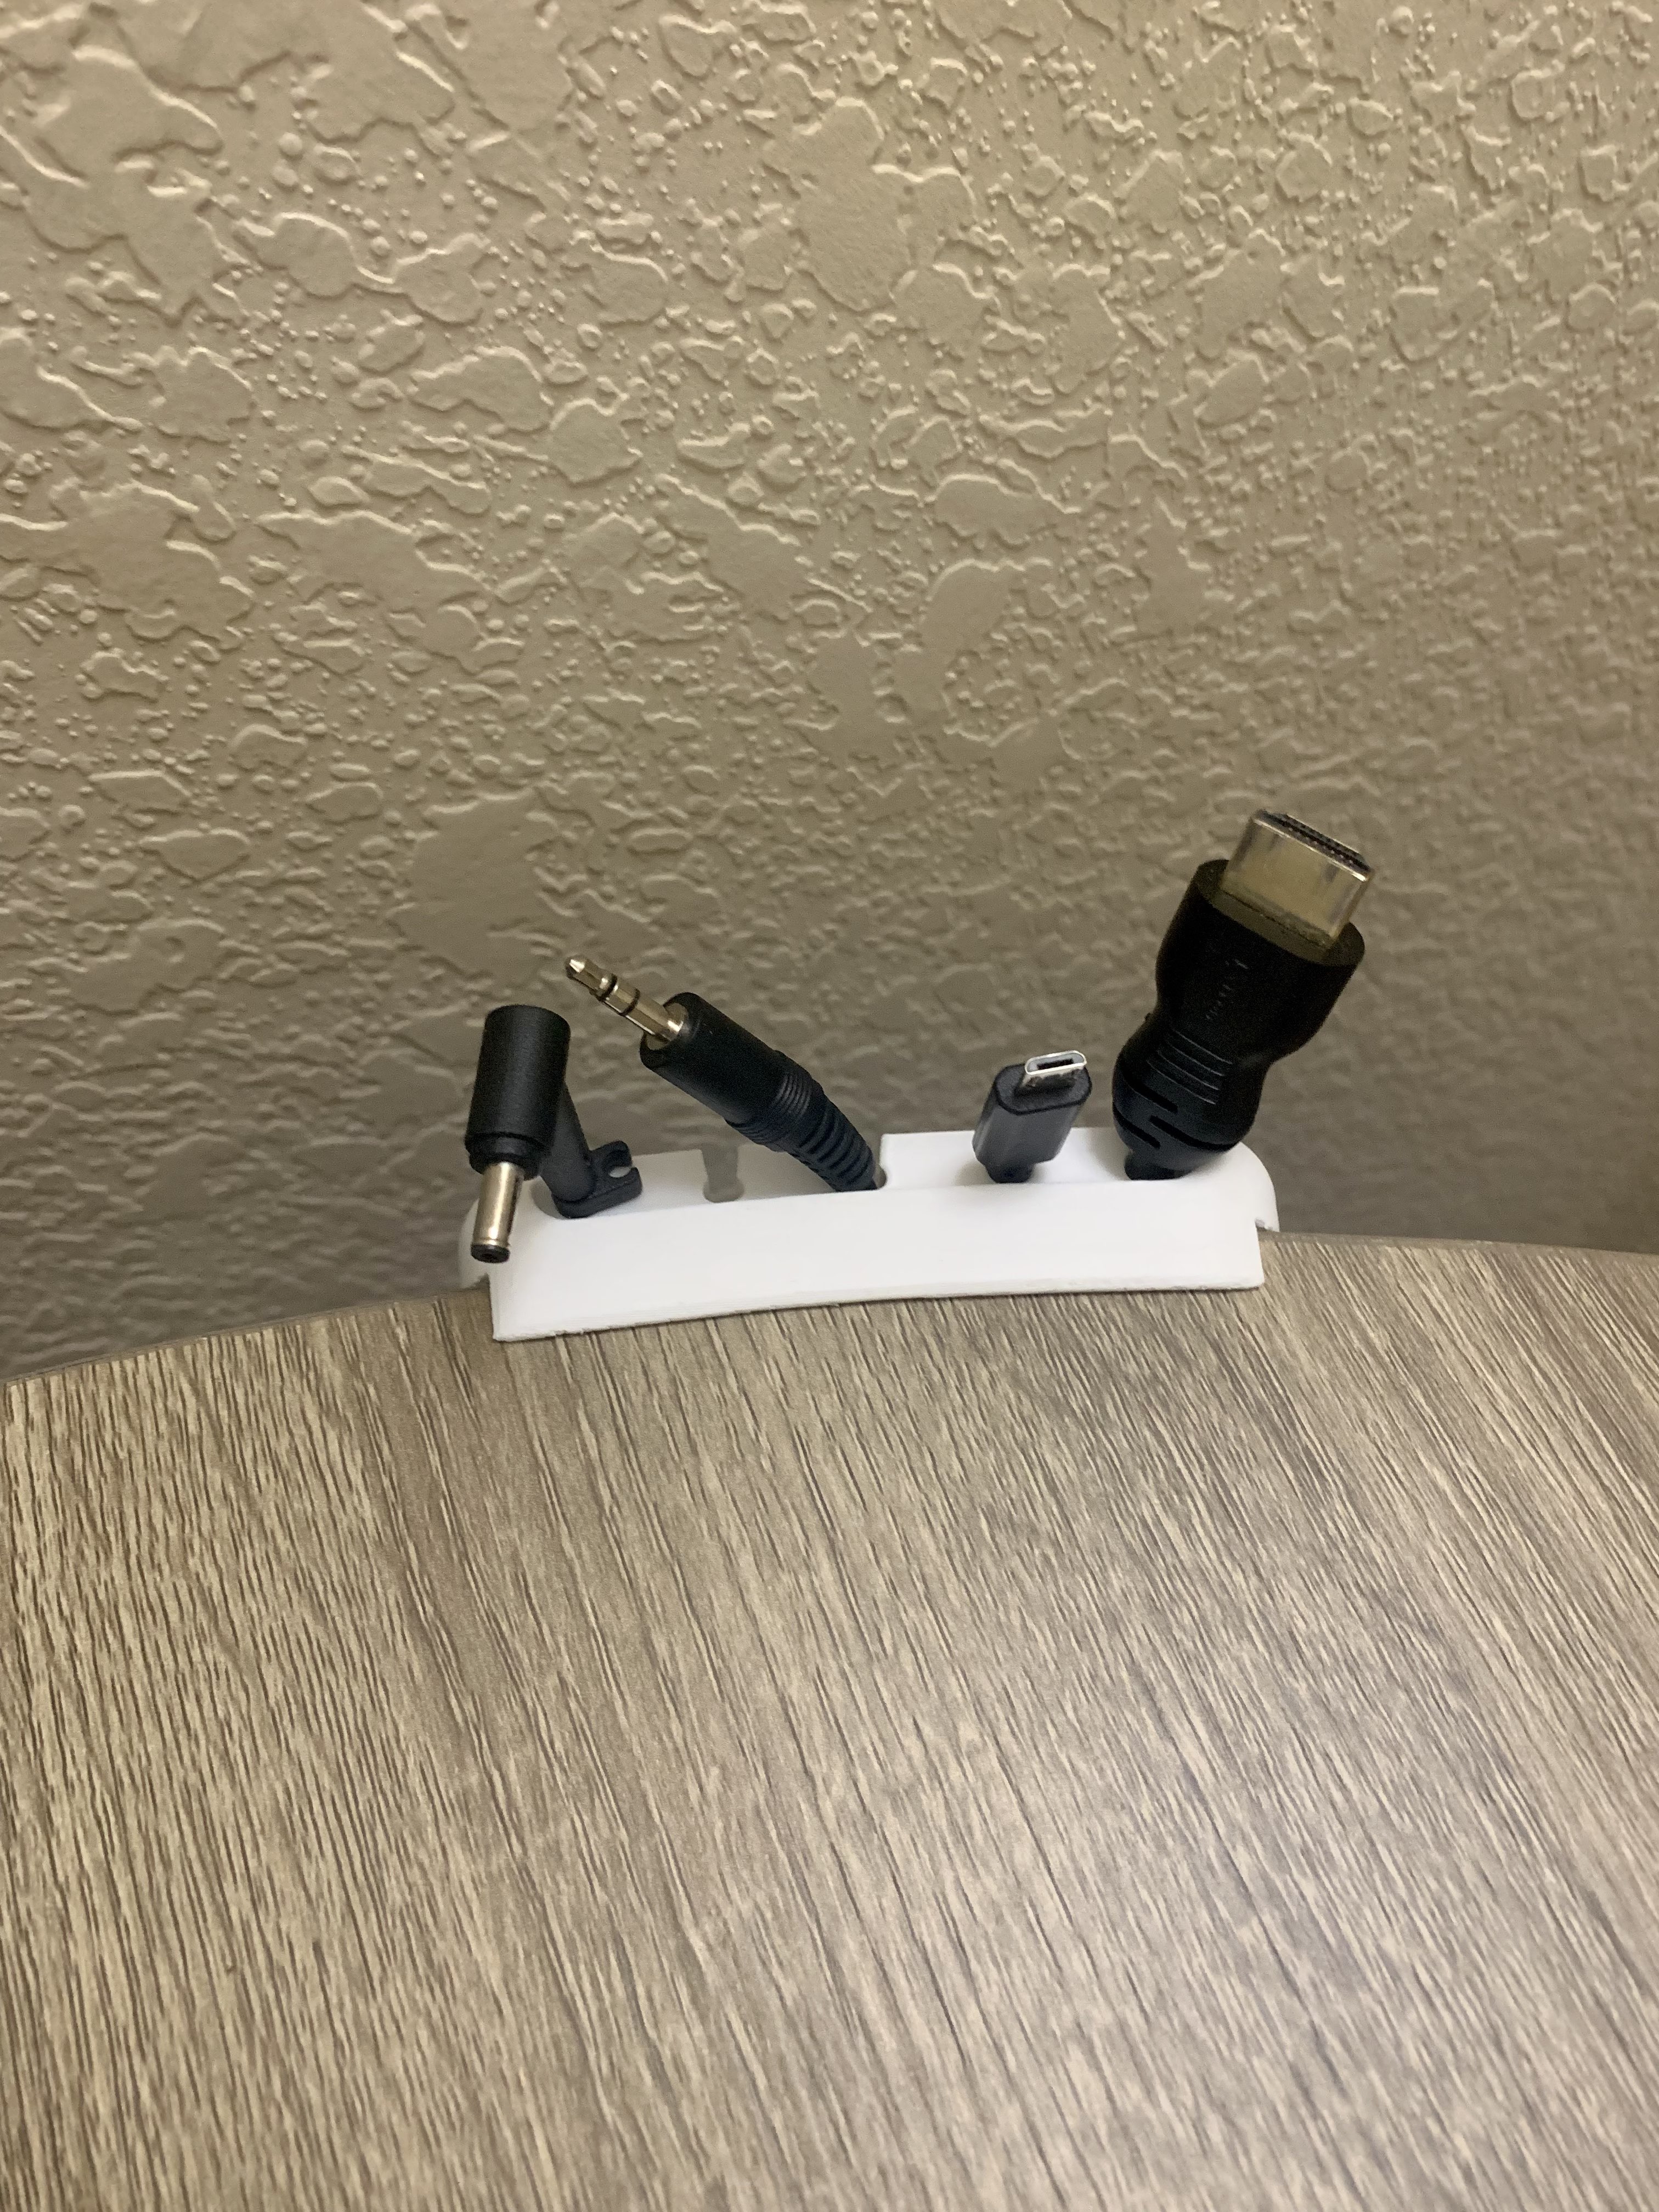 Cable Holder for Curved Desk